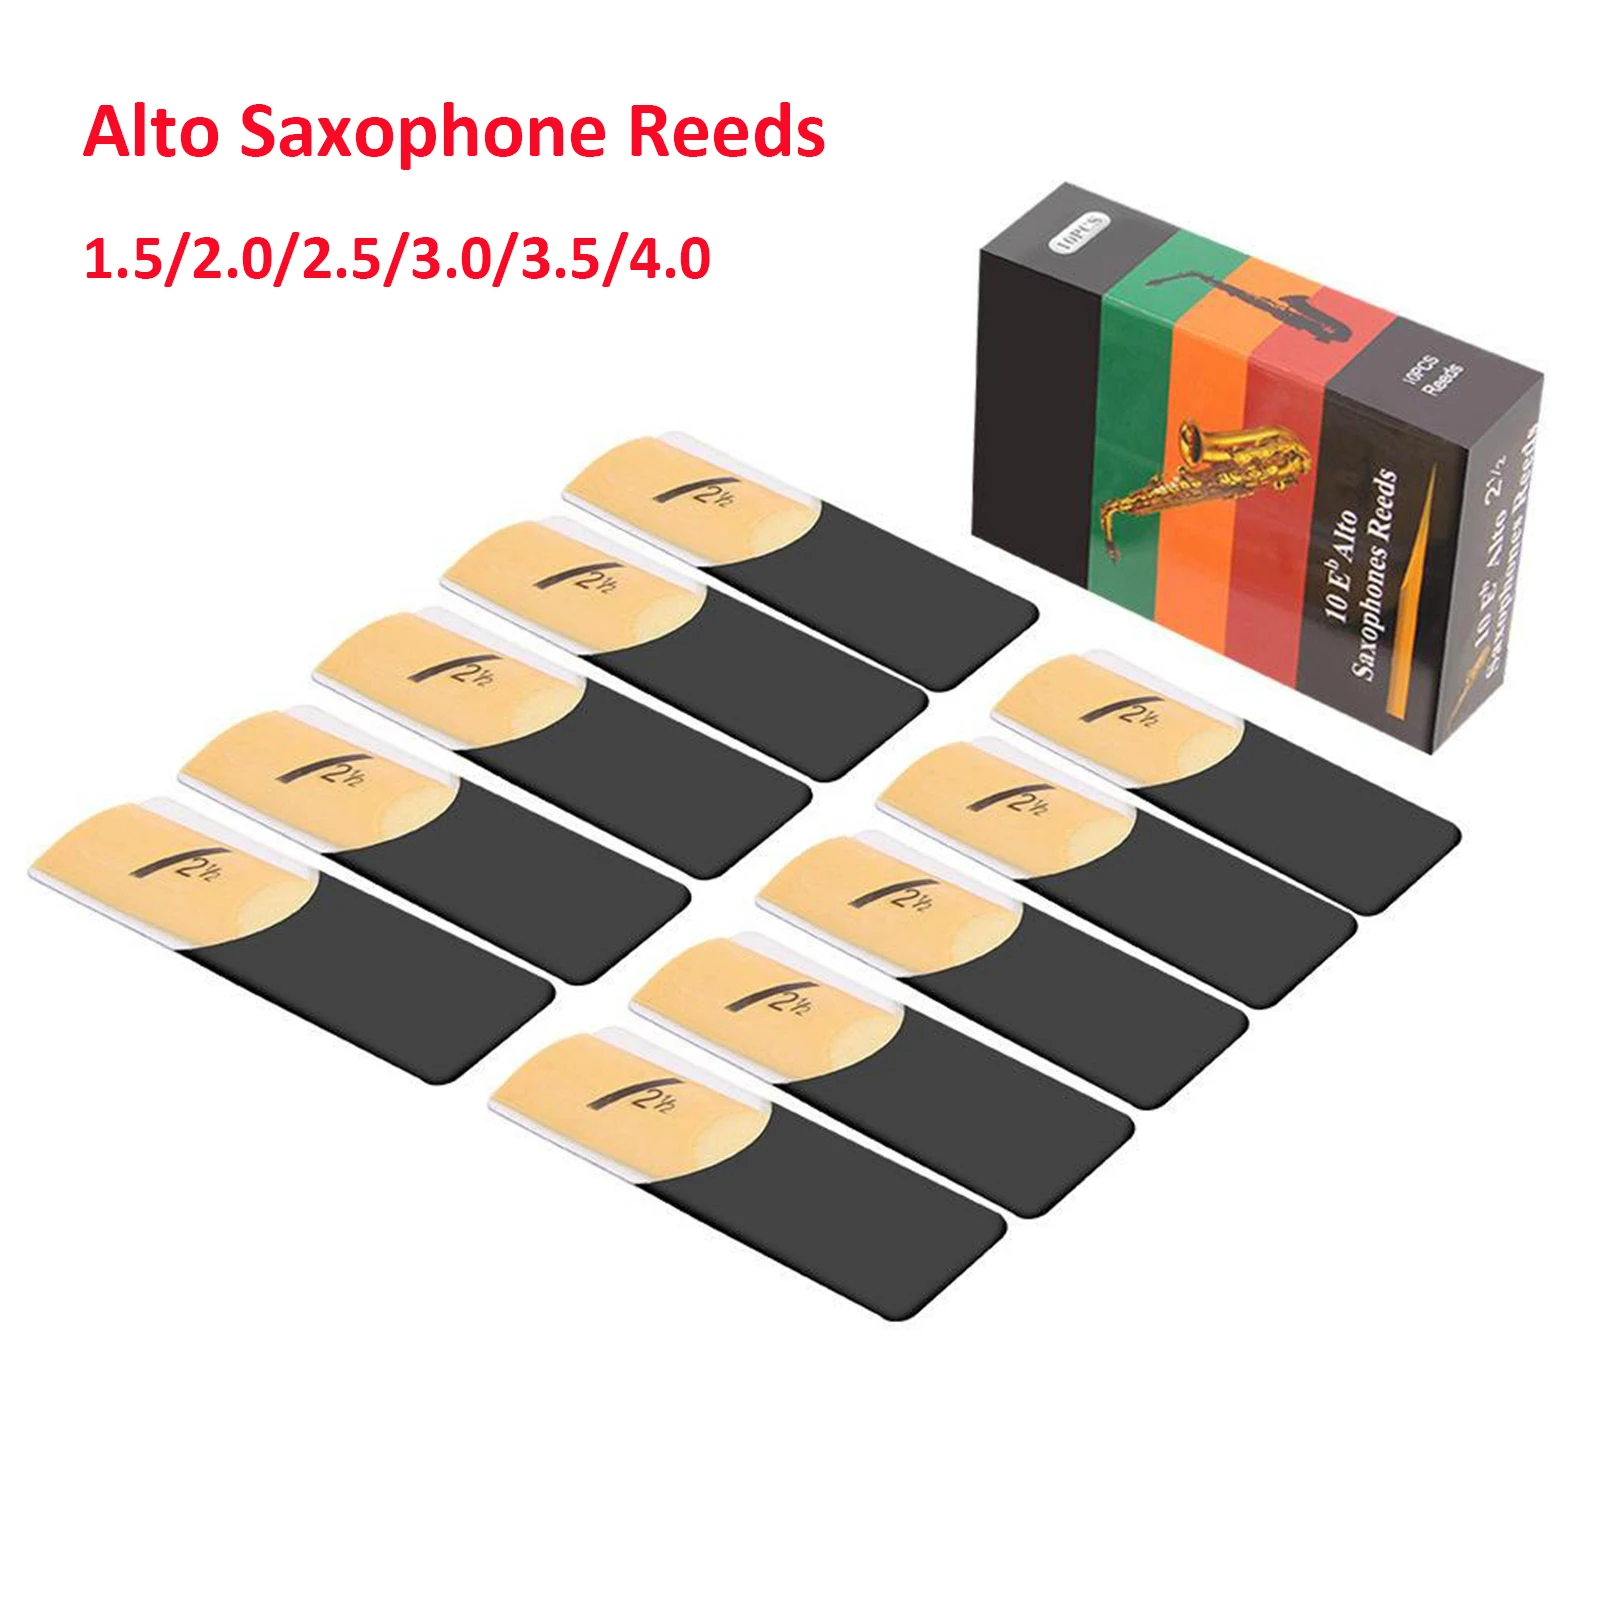 Alto Saksofon Trs 10-Pack-Gnome Papir Primeru Moč 1.5, 2.0, 2.5, 3.0, 3.5, 4.0